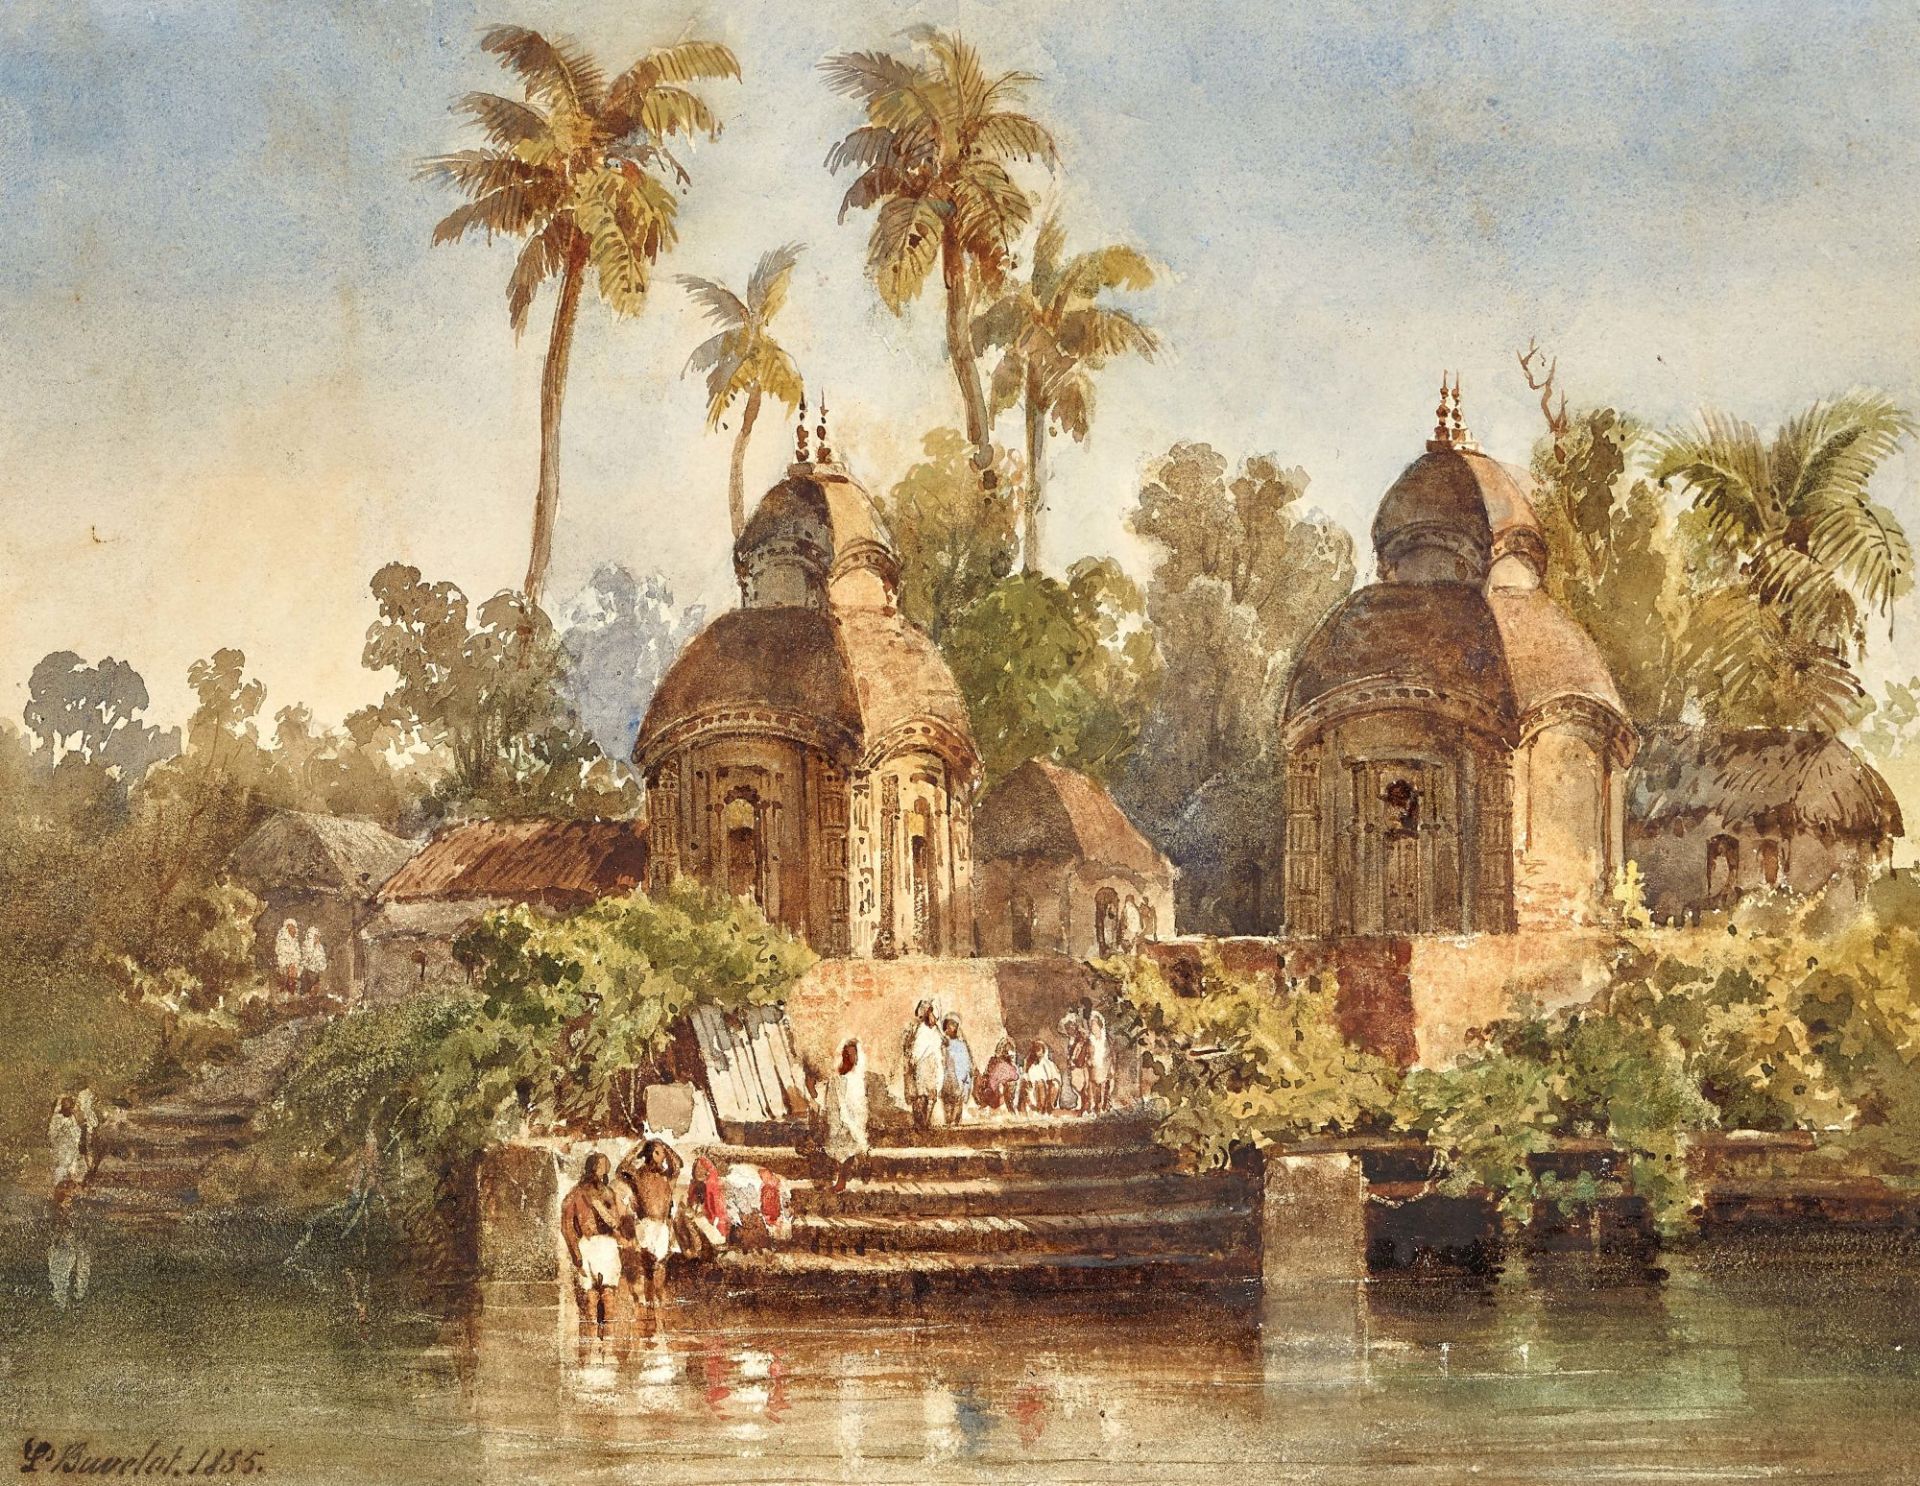 BUVELOT, LOUIS (EIGTL. ABRAM-LOUIS BUVELOT): "The Kalighat Kali Temple on the Hoogly, Calcutta".